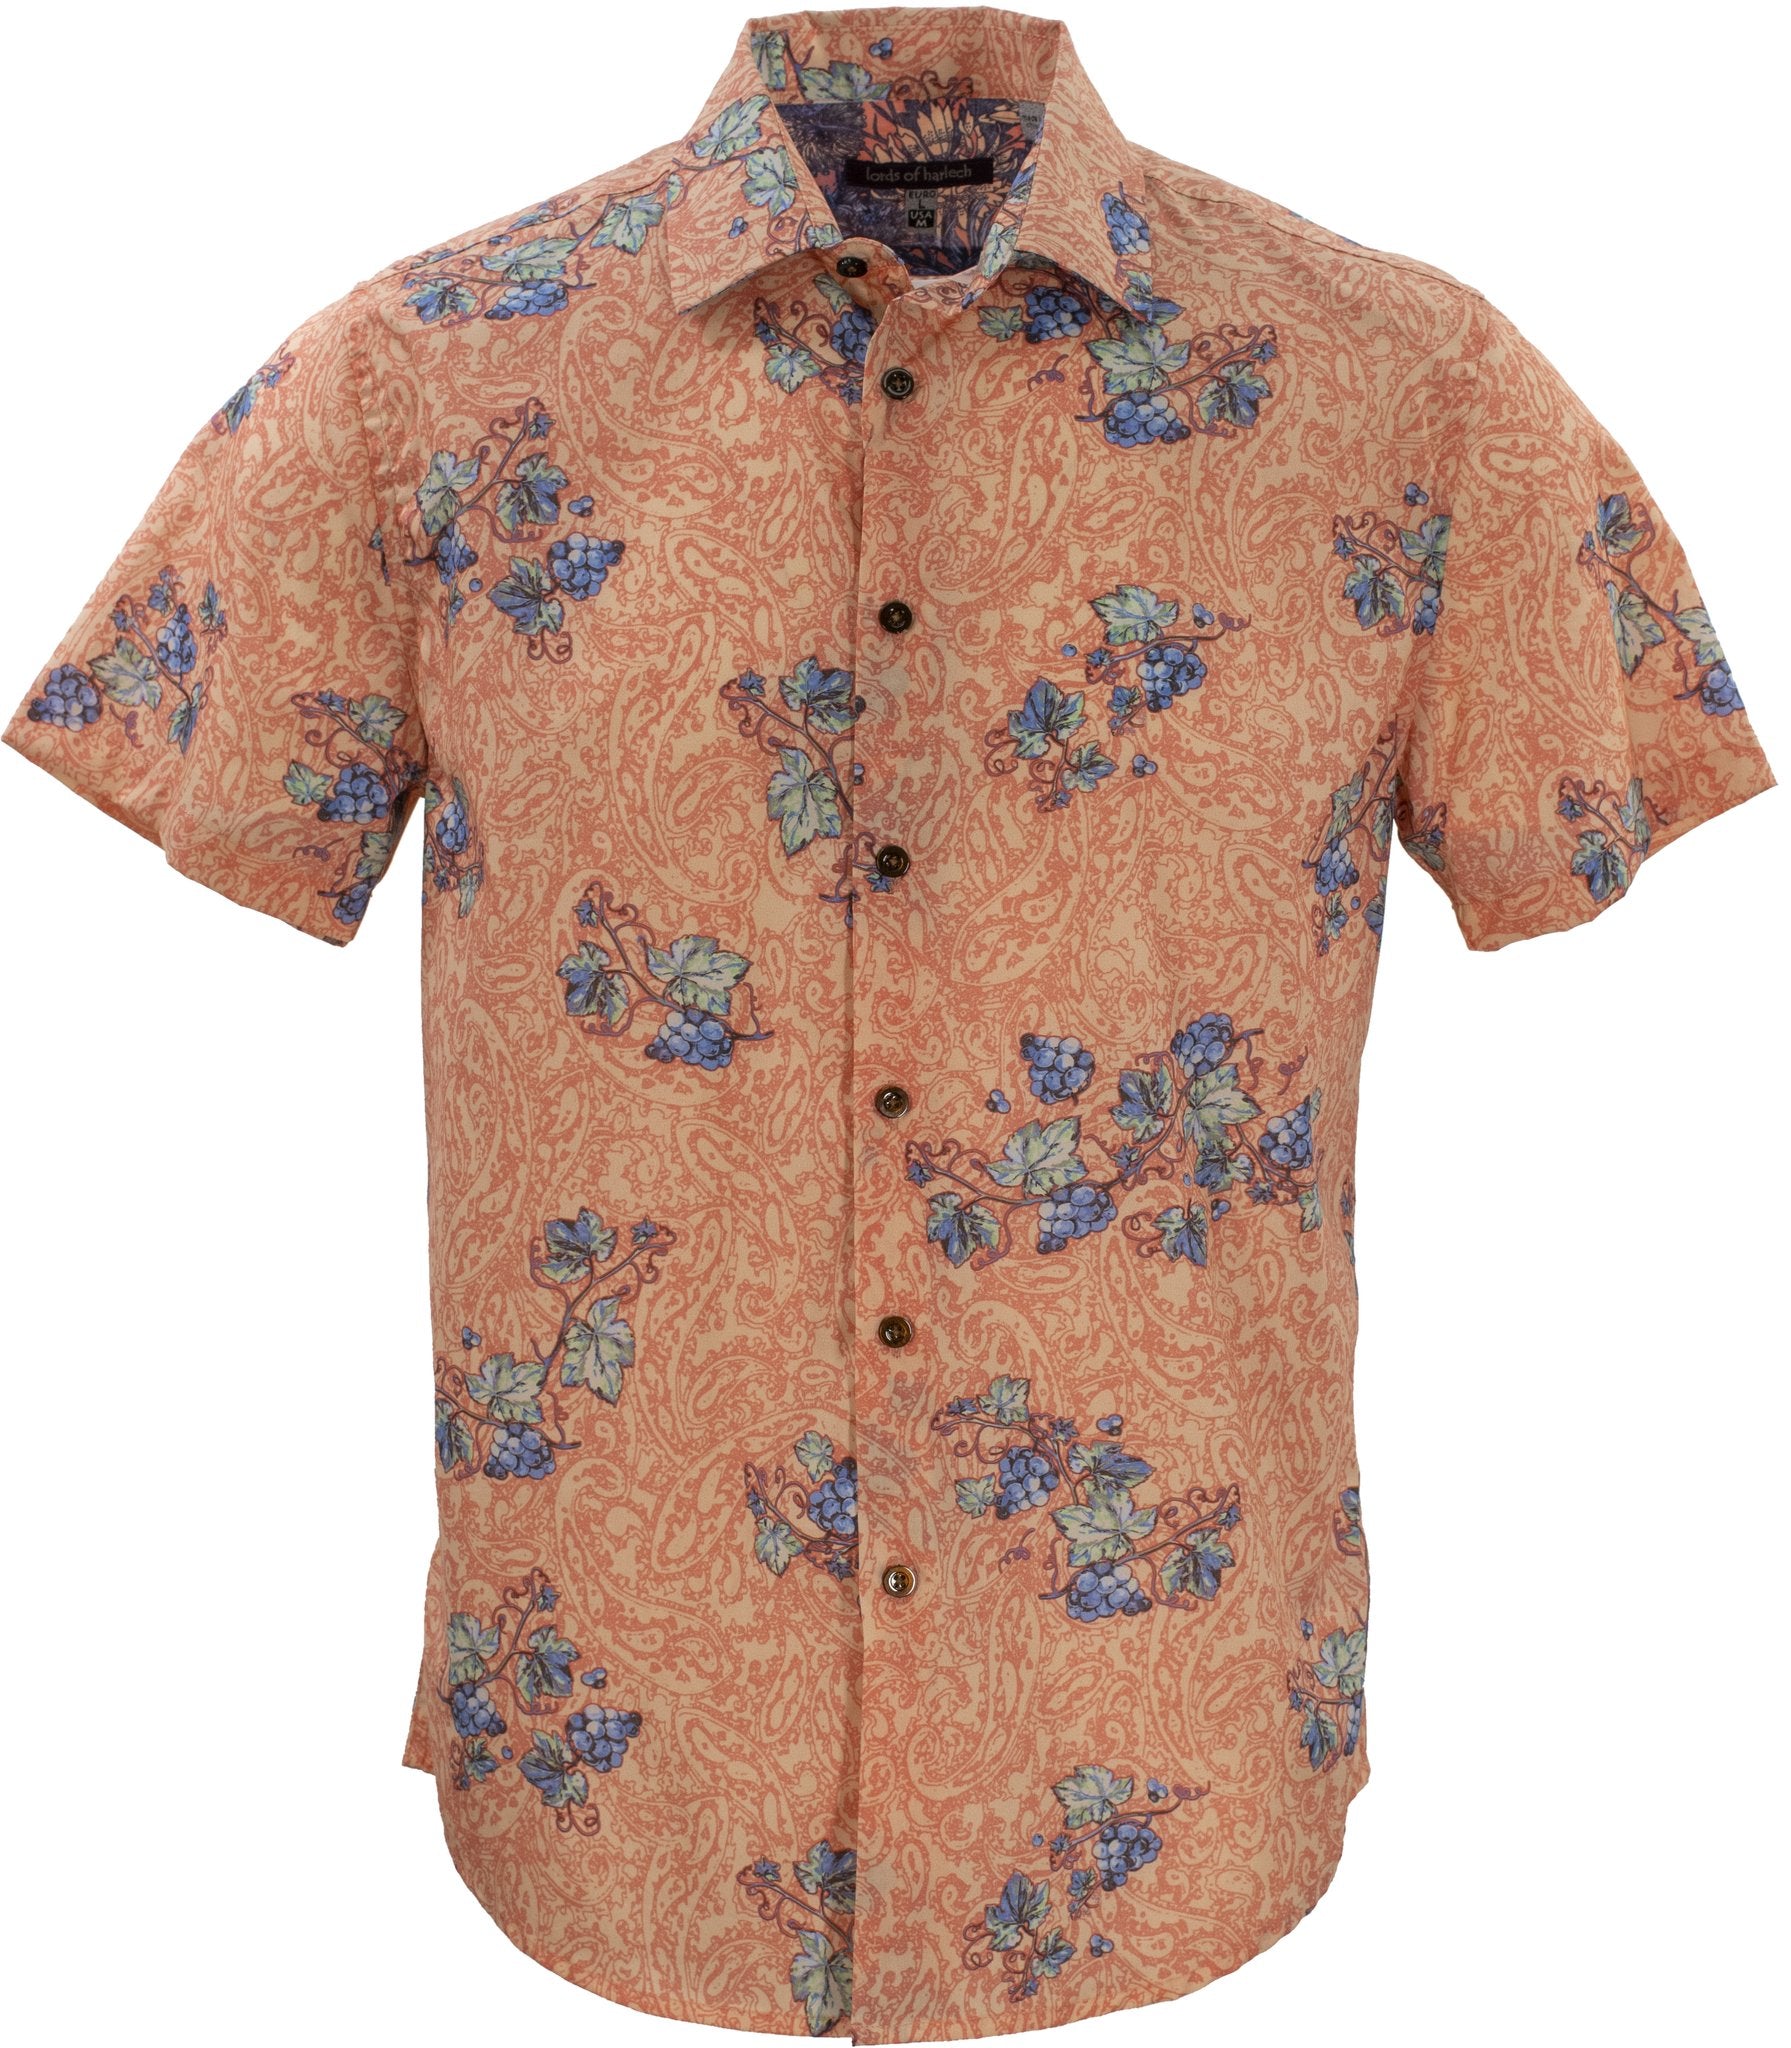 Scott Paisley Vines Shirt S/S: Peach